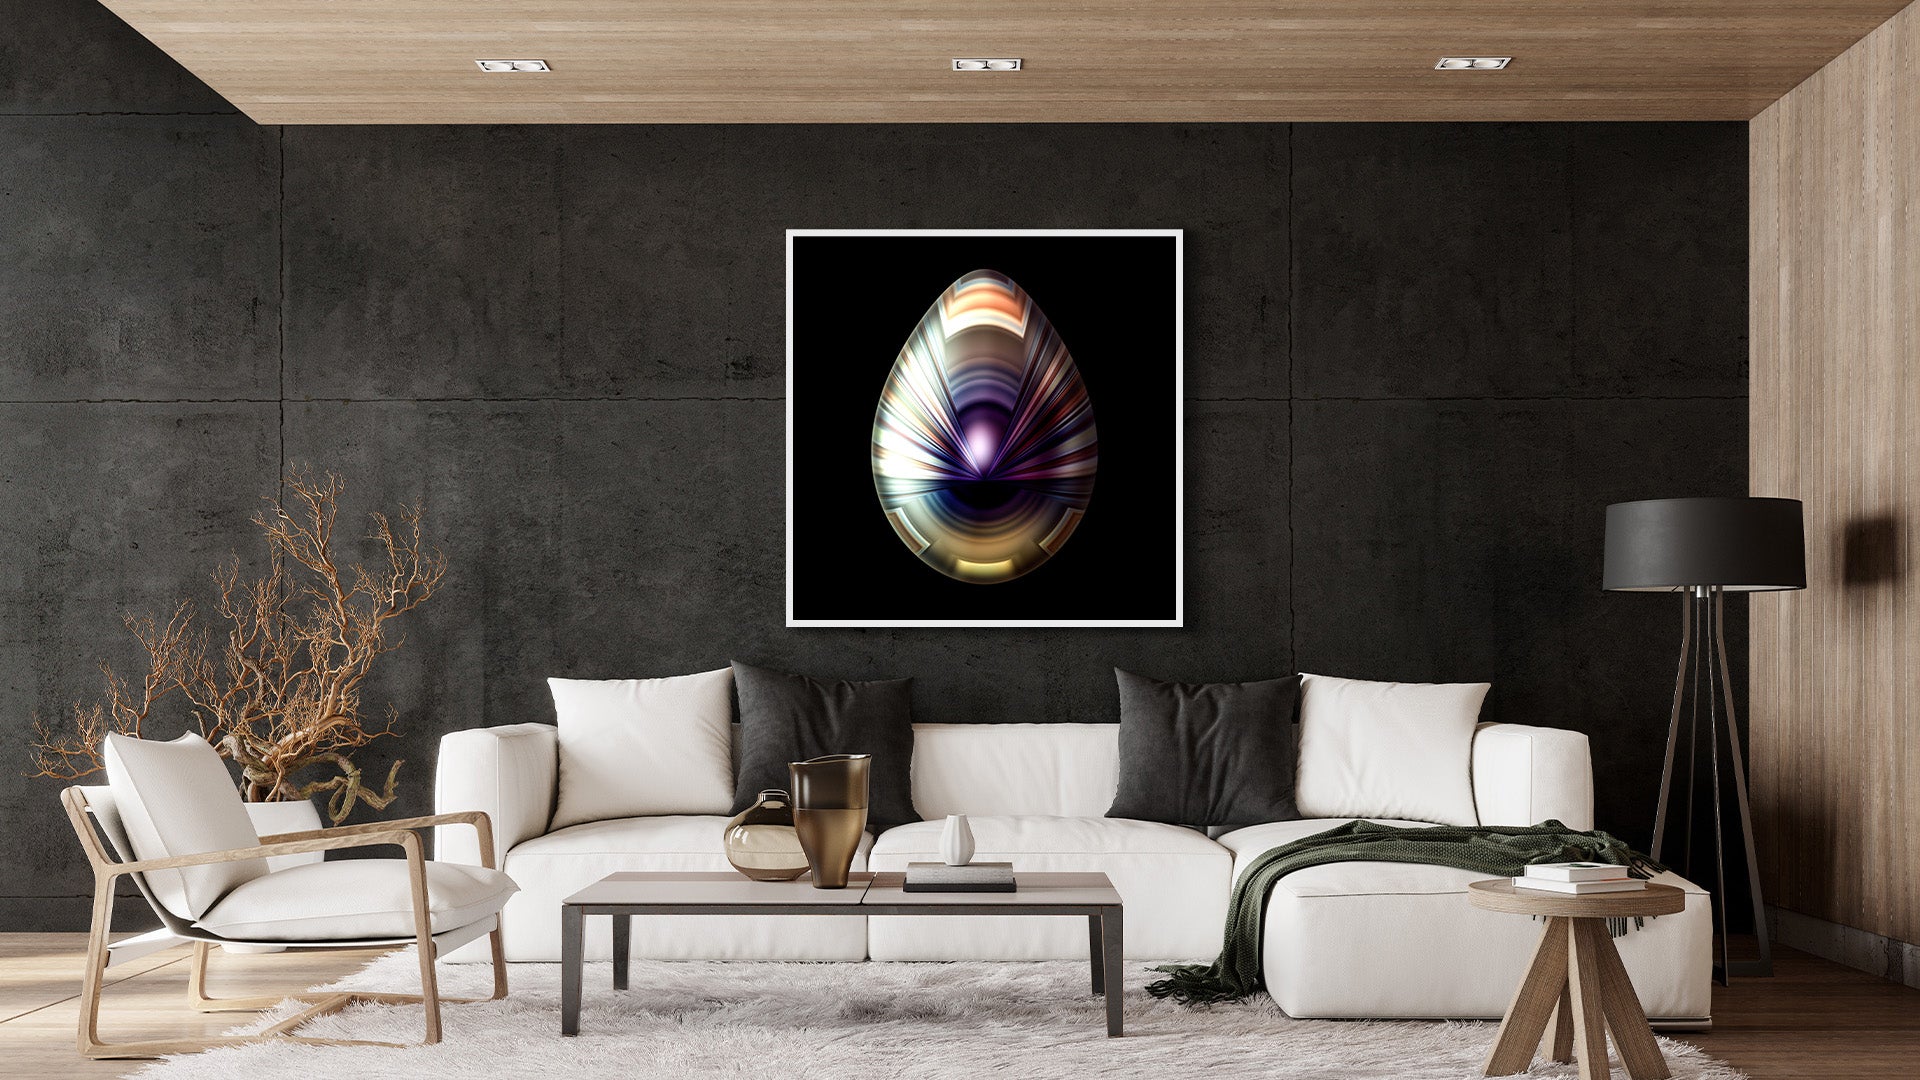 Pysanka Egg with Pearlescent Cloak - Moonlit Shroud